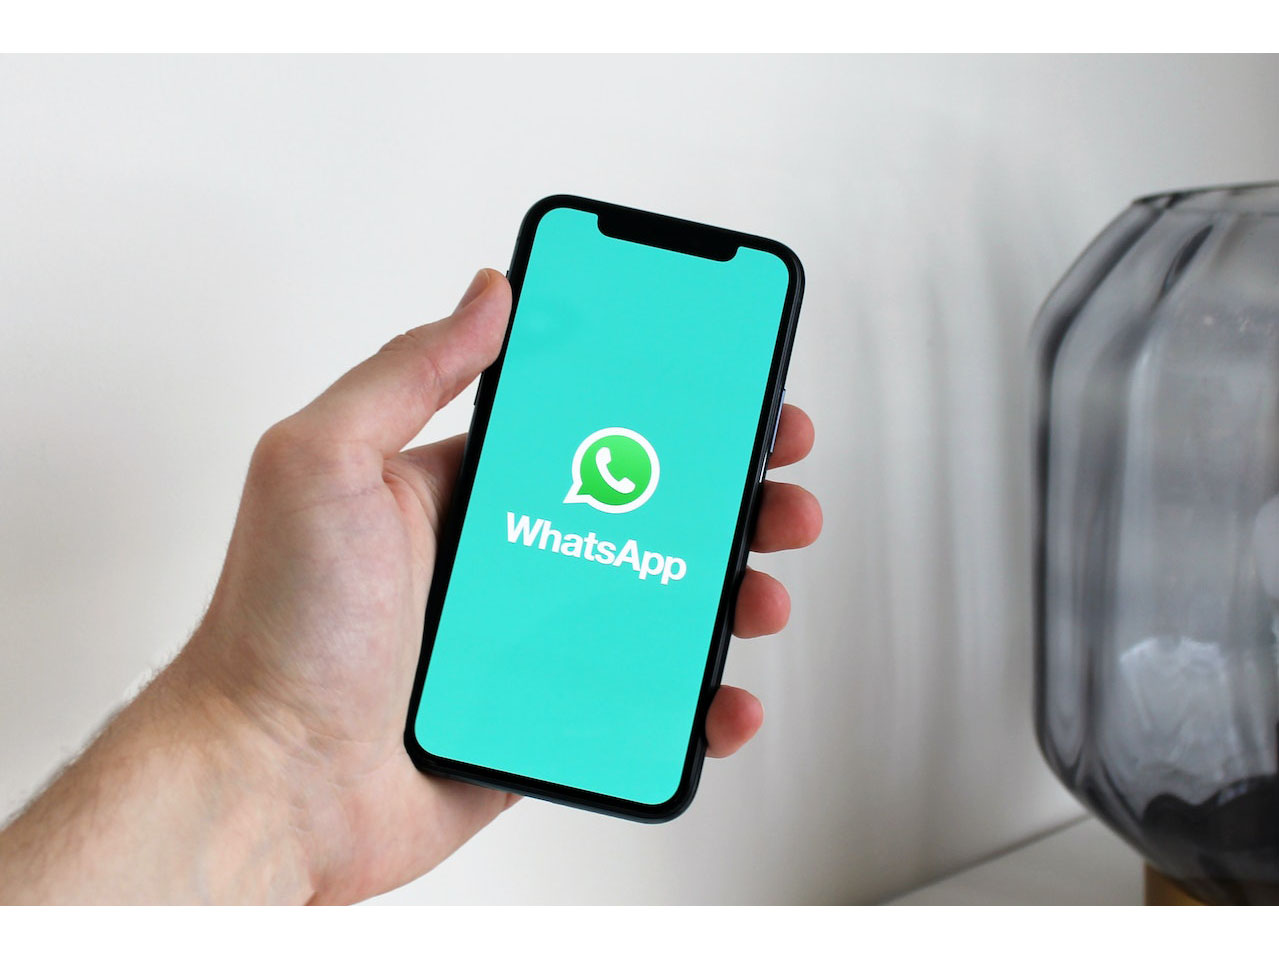 WhatsApp is the favorite platform among social media users